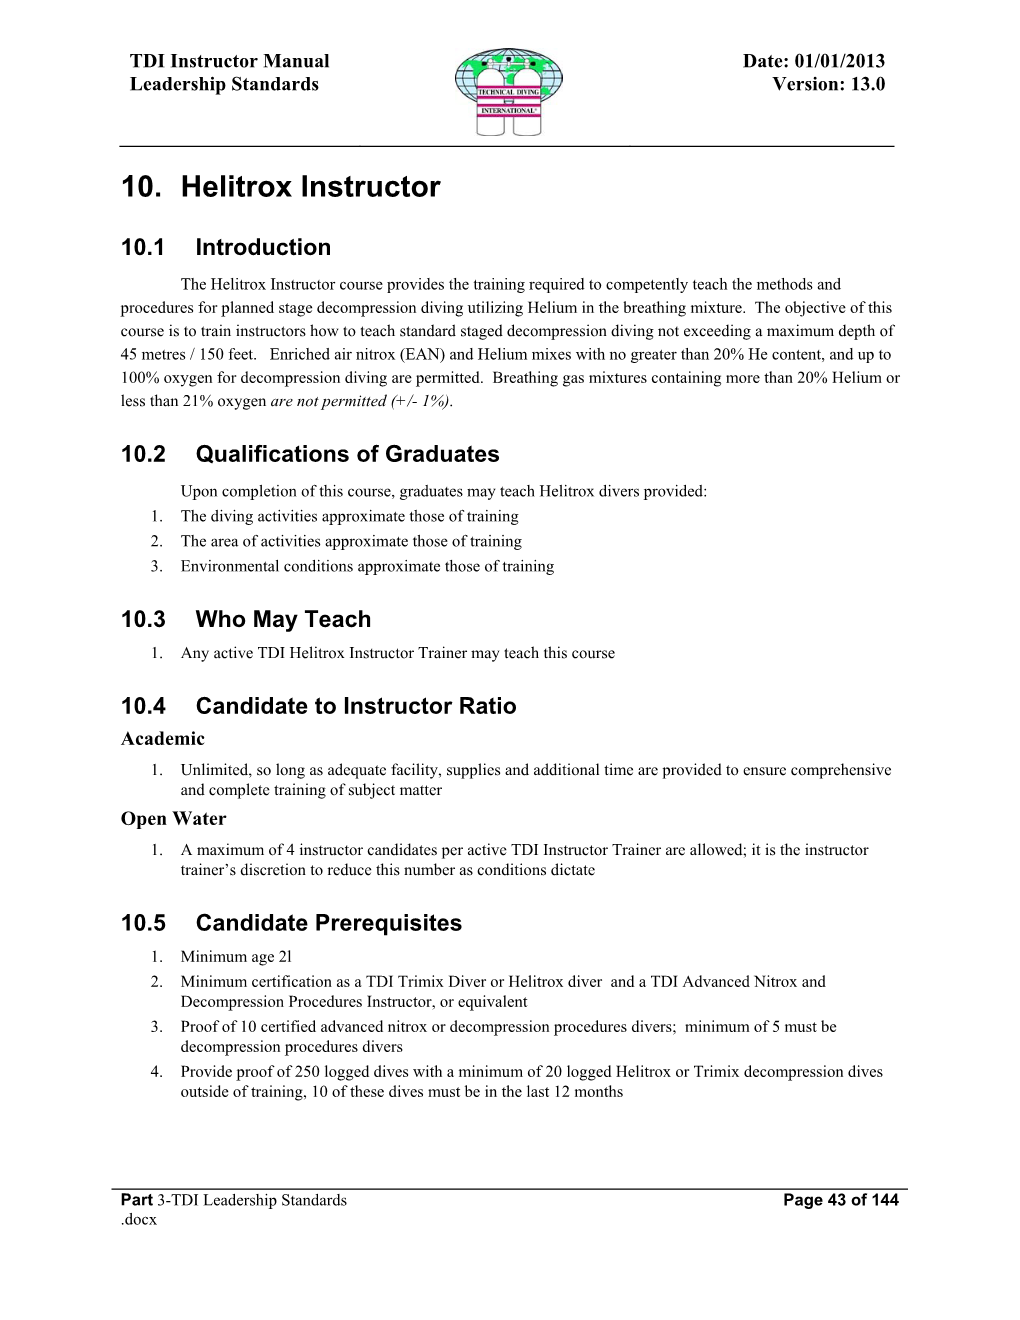 10. Helitrox Instructor